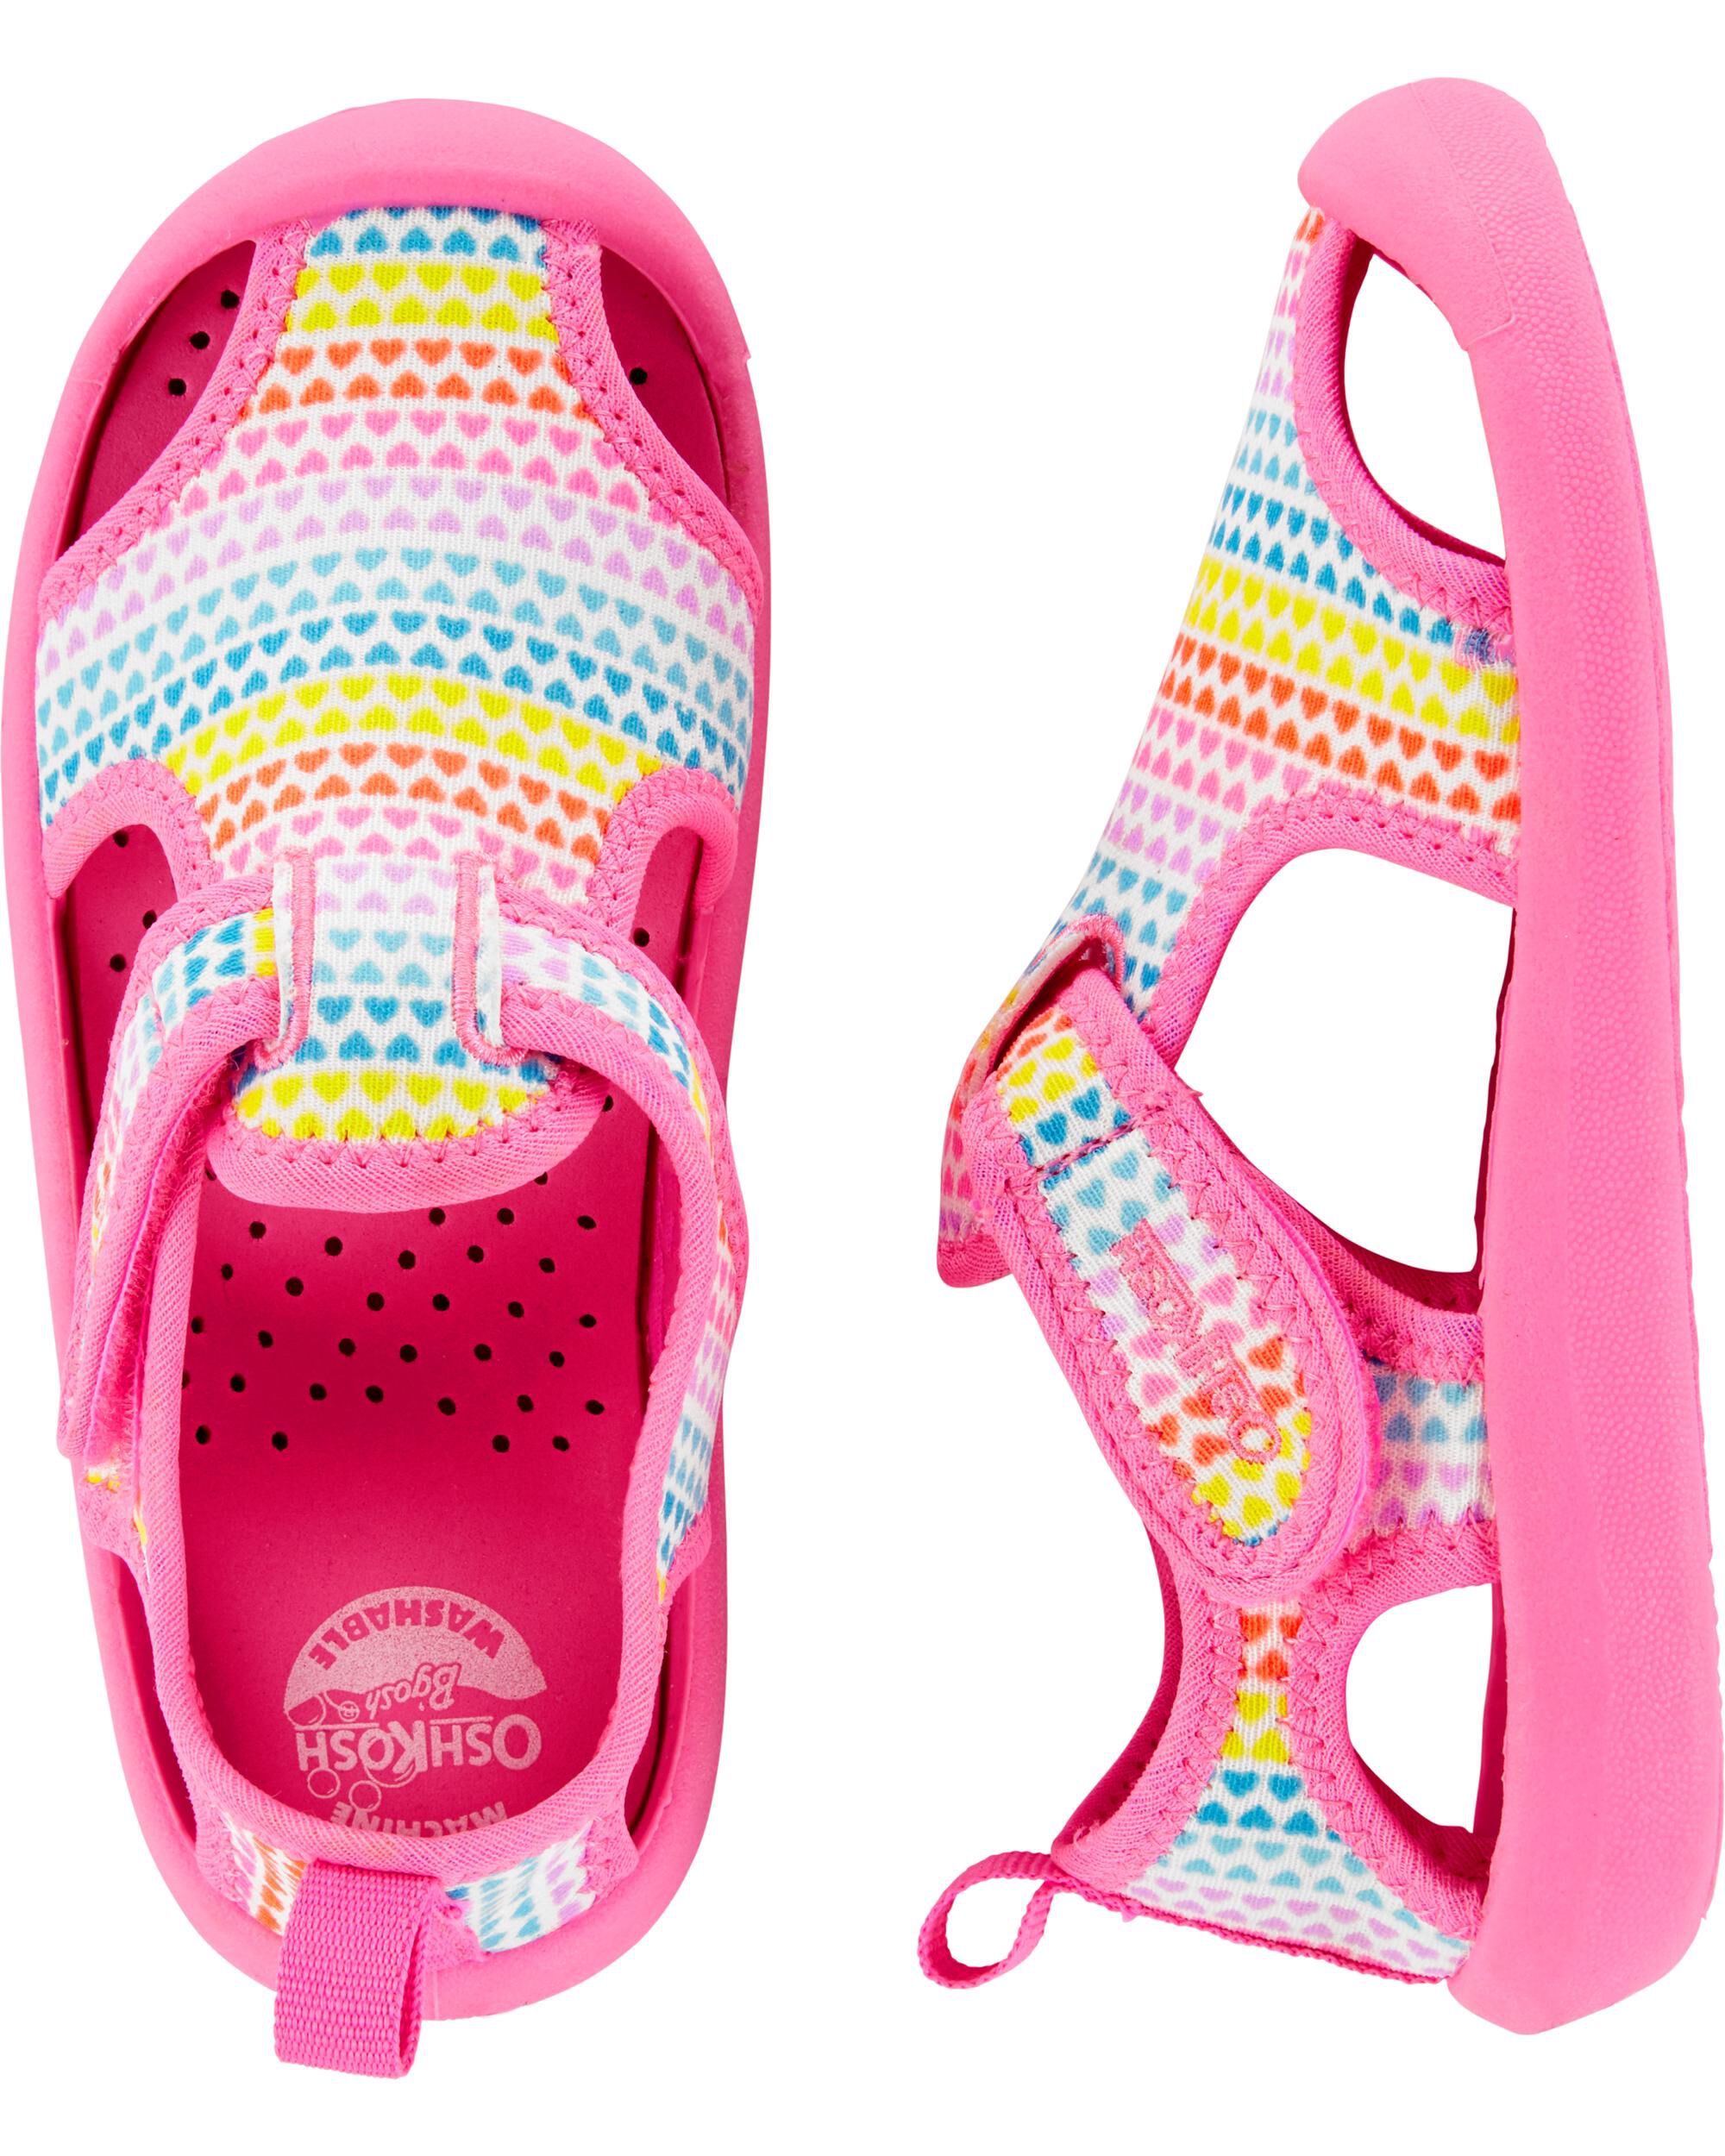 OshKosh Rainbow Water Shoes | carters.com